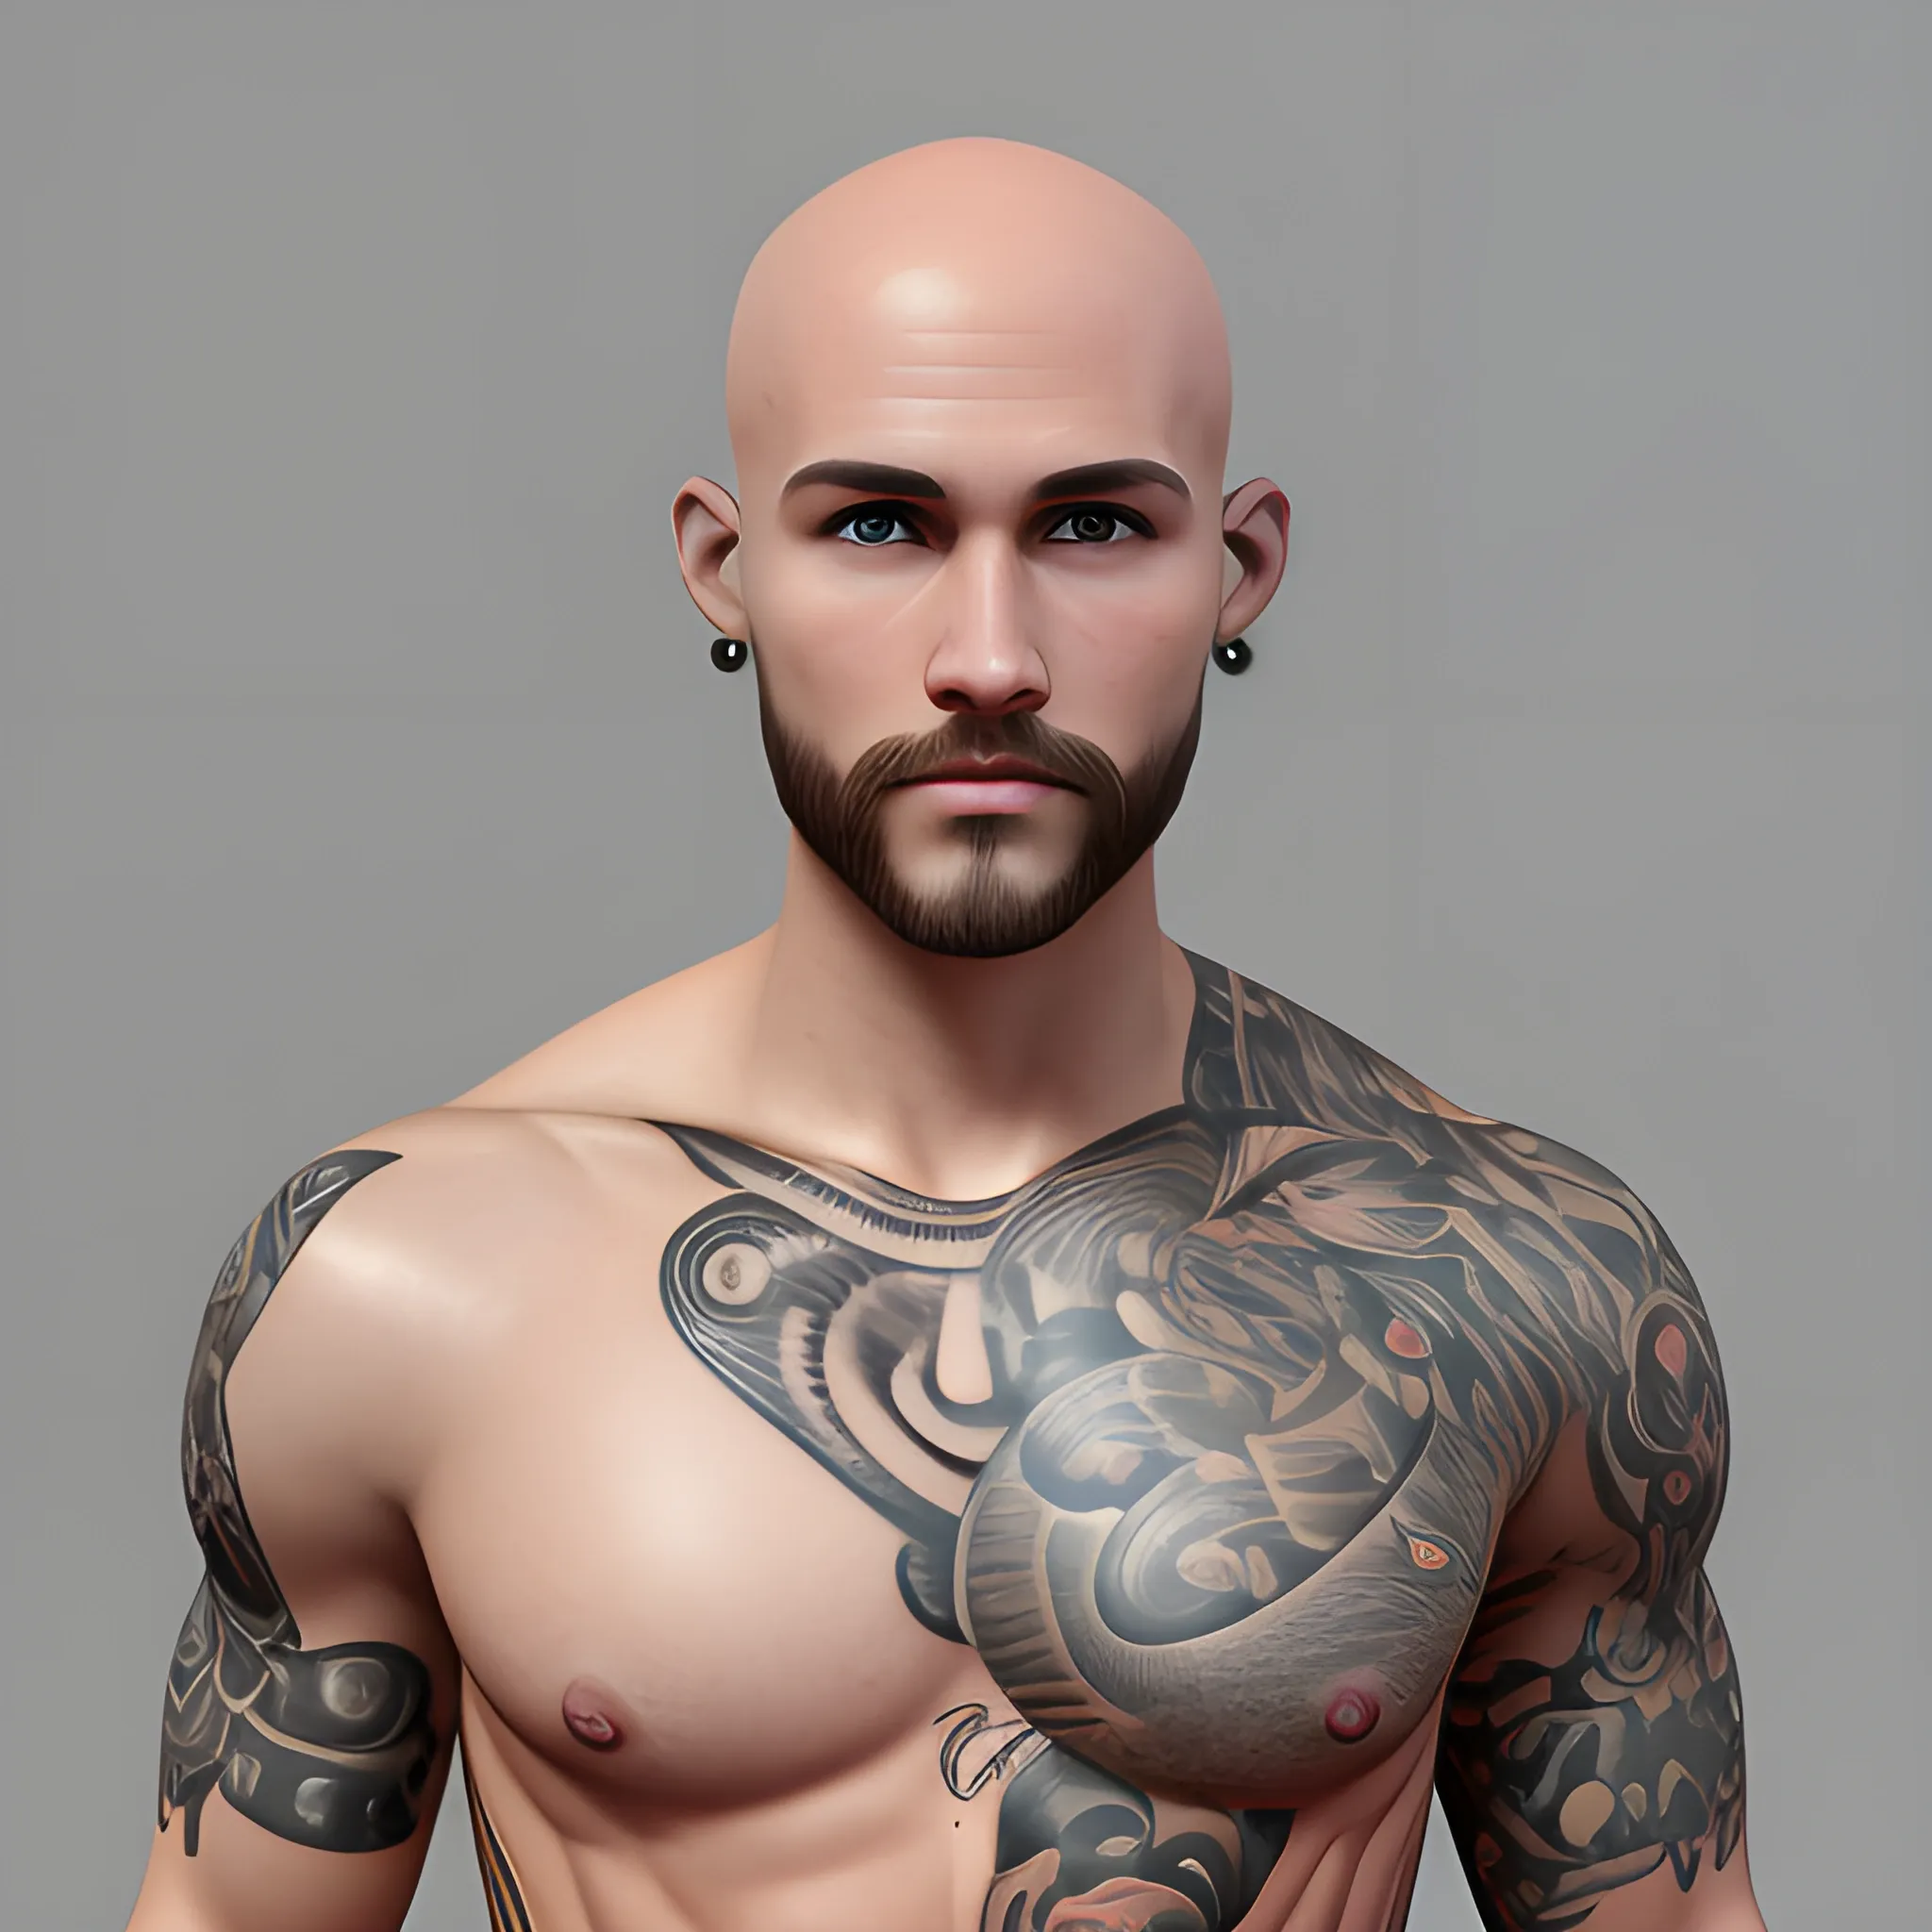 Fit dude, bald head, short beard and earrings, 3D. No mustache. Nude shoulder tattoo